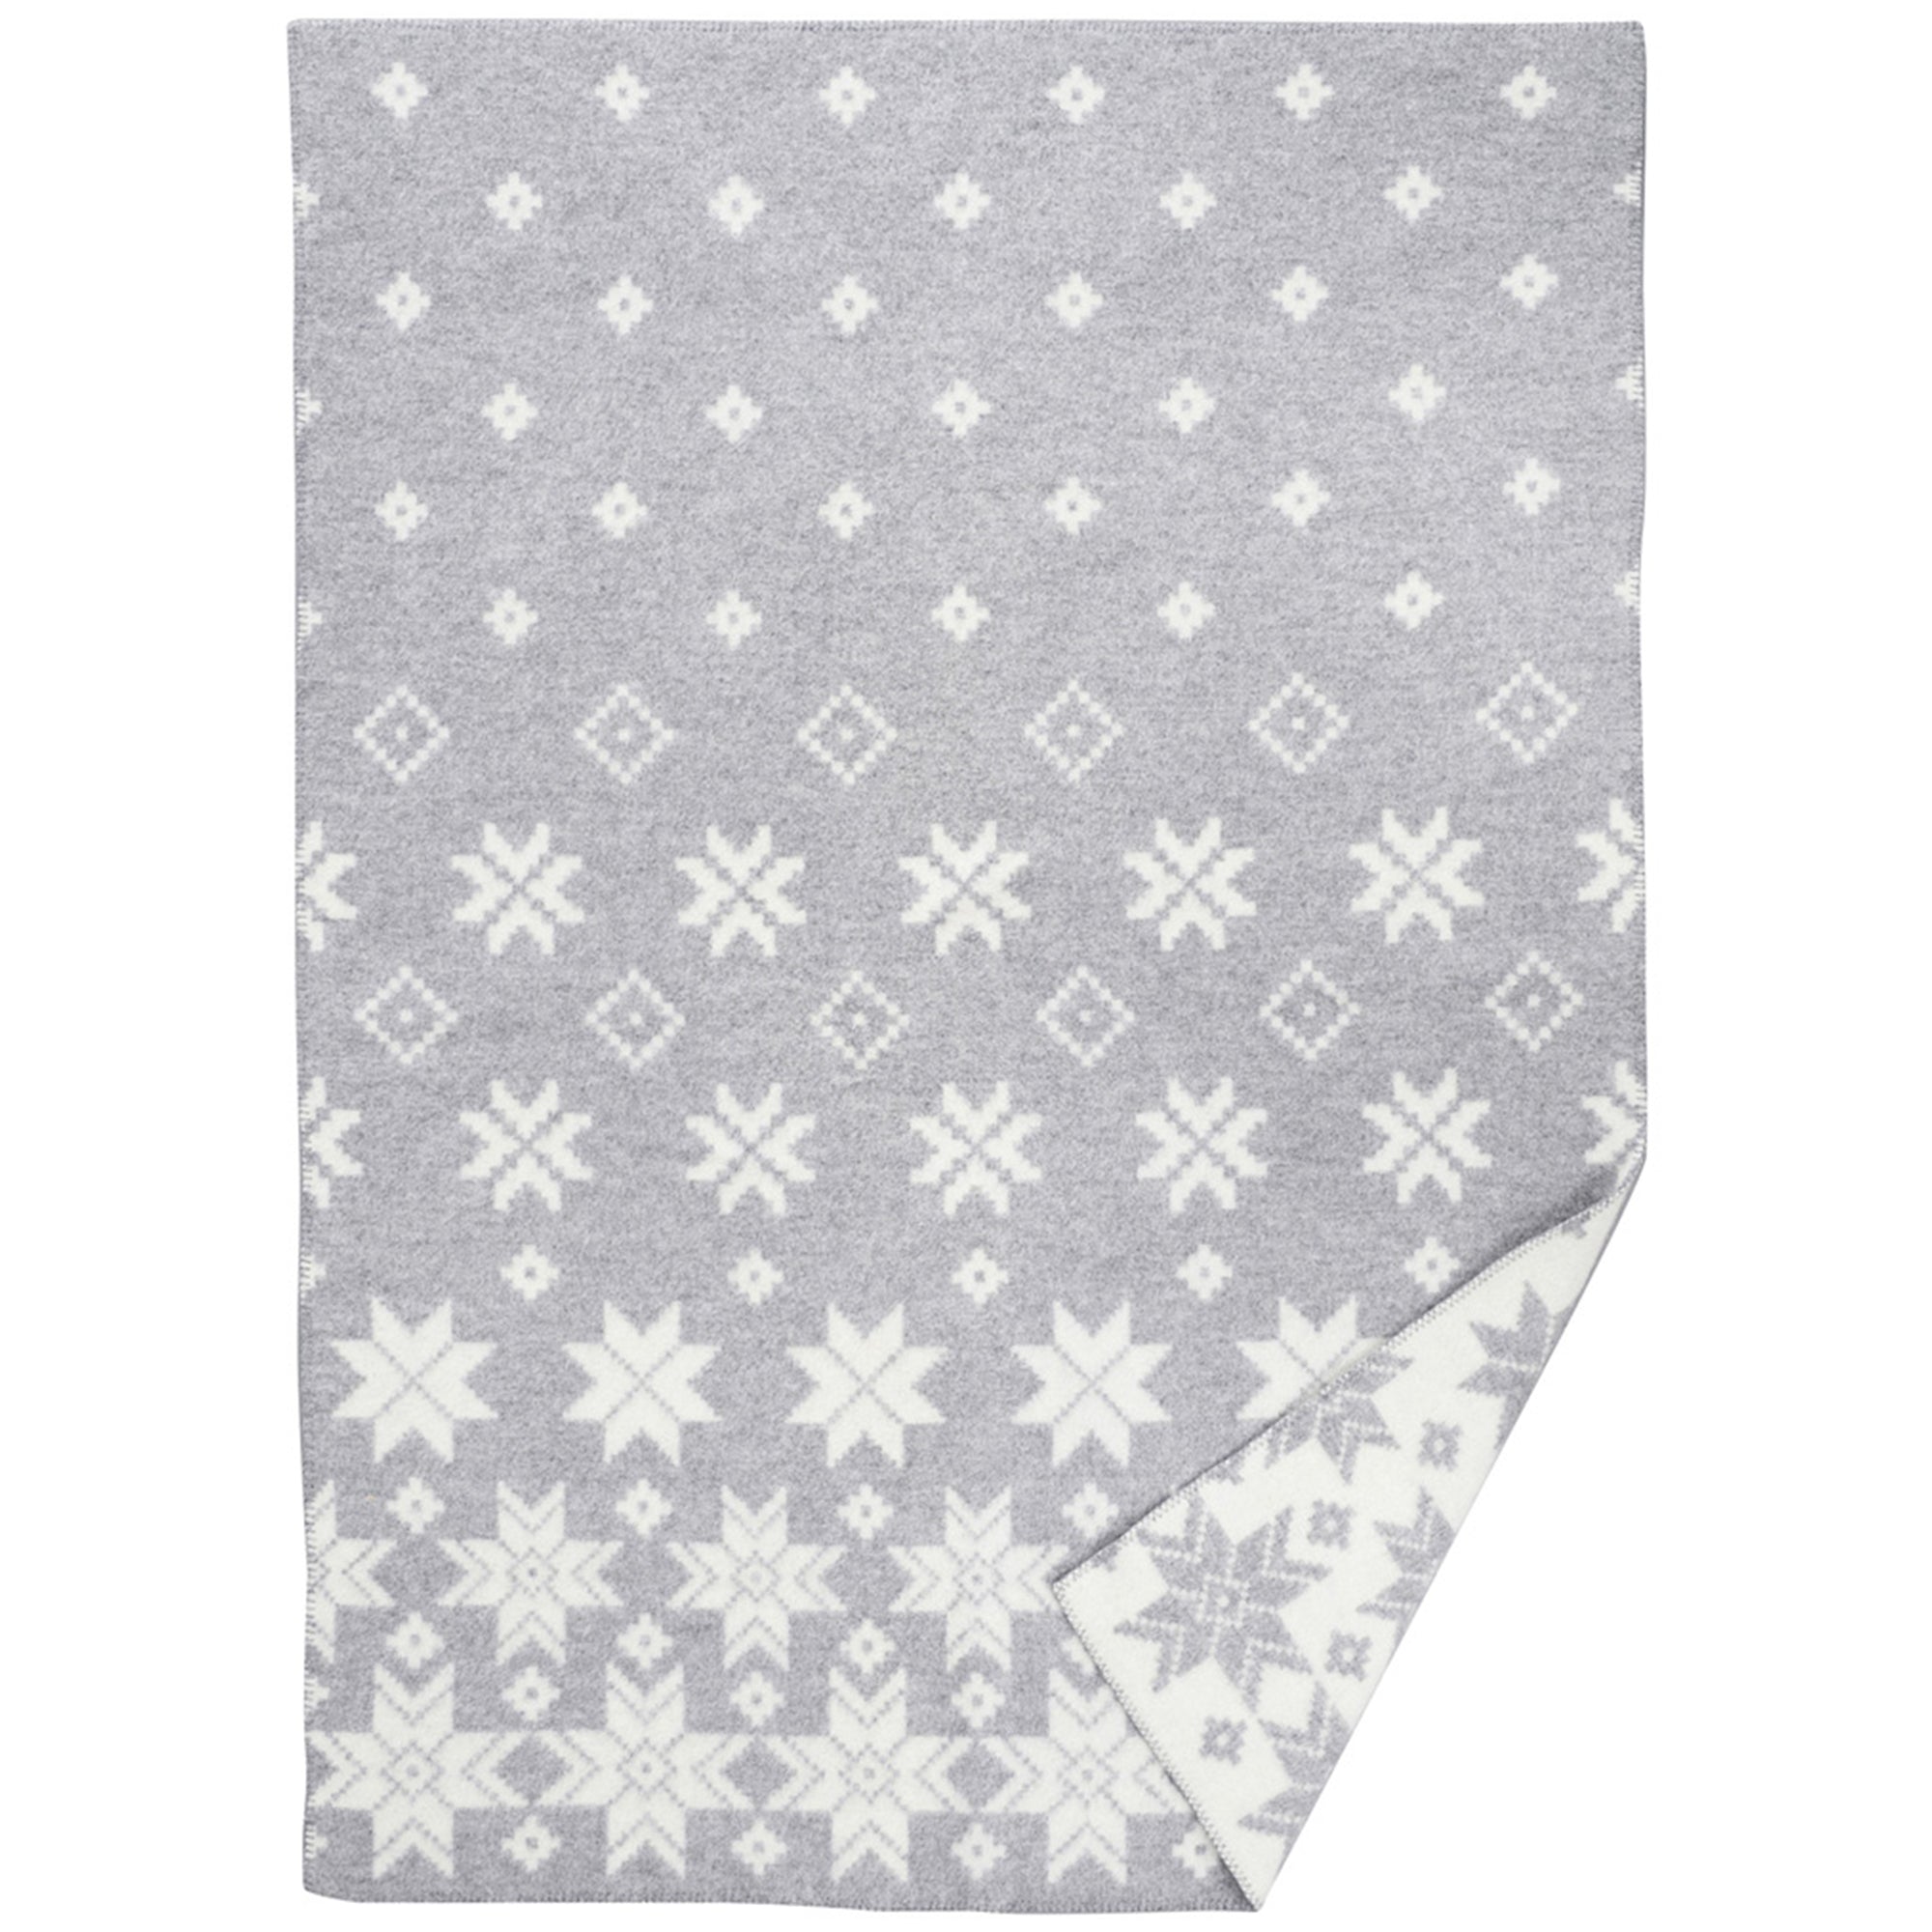 Snowfall Grey 130x180cm Woven Lambswool Blanket